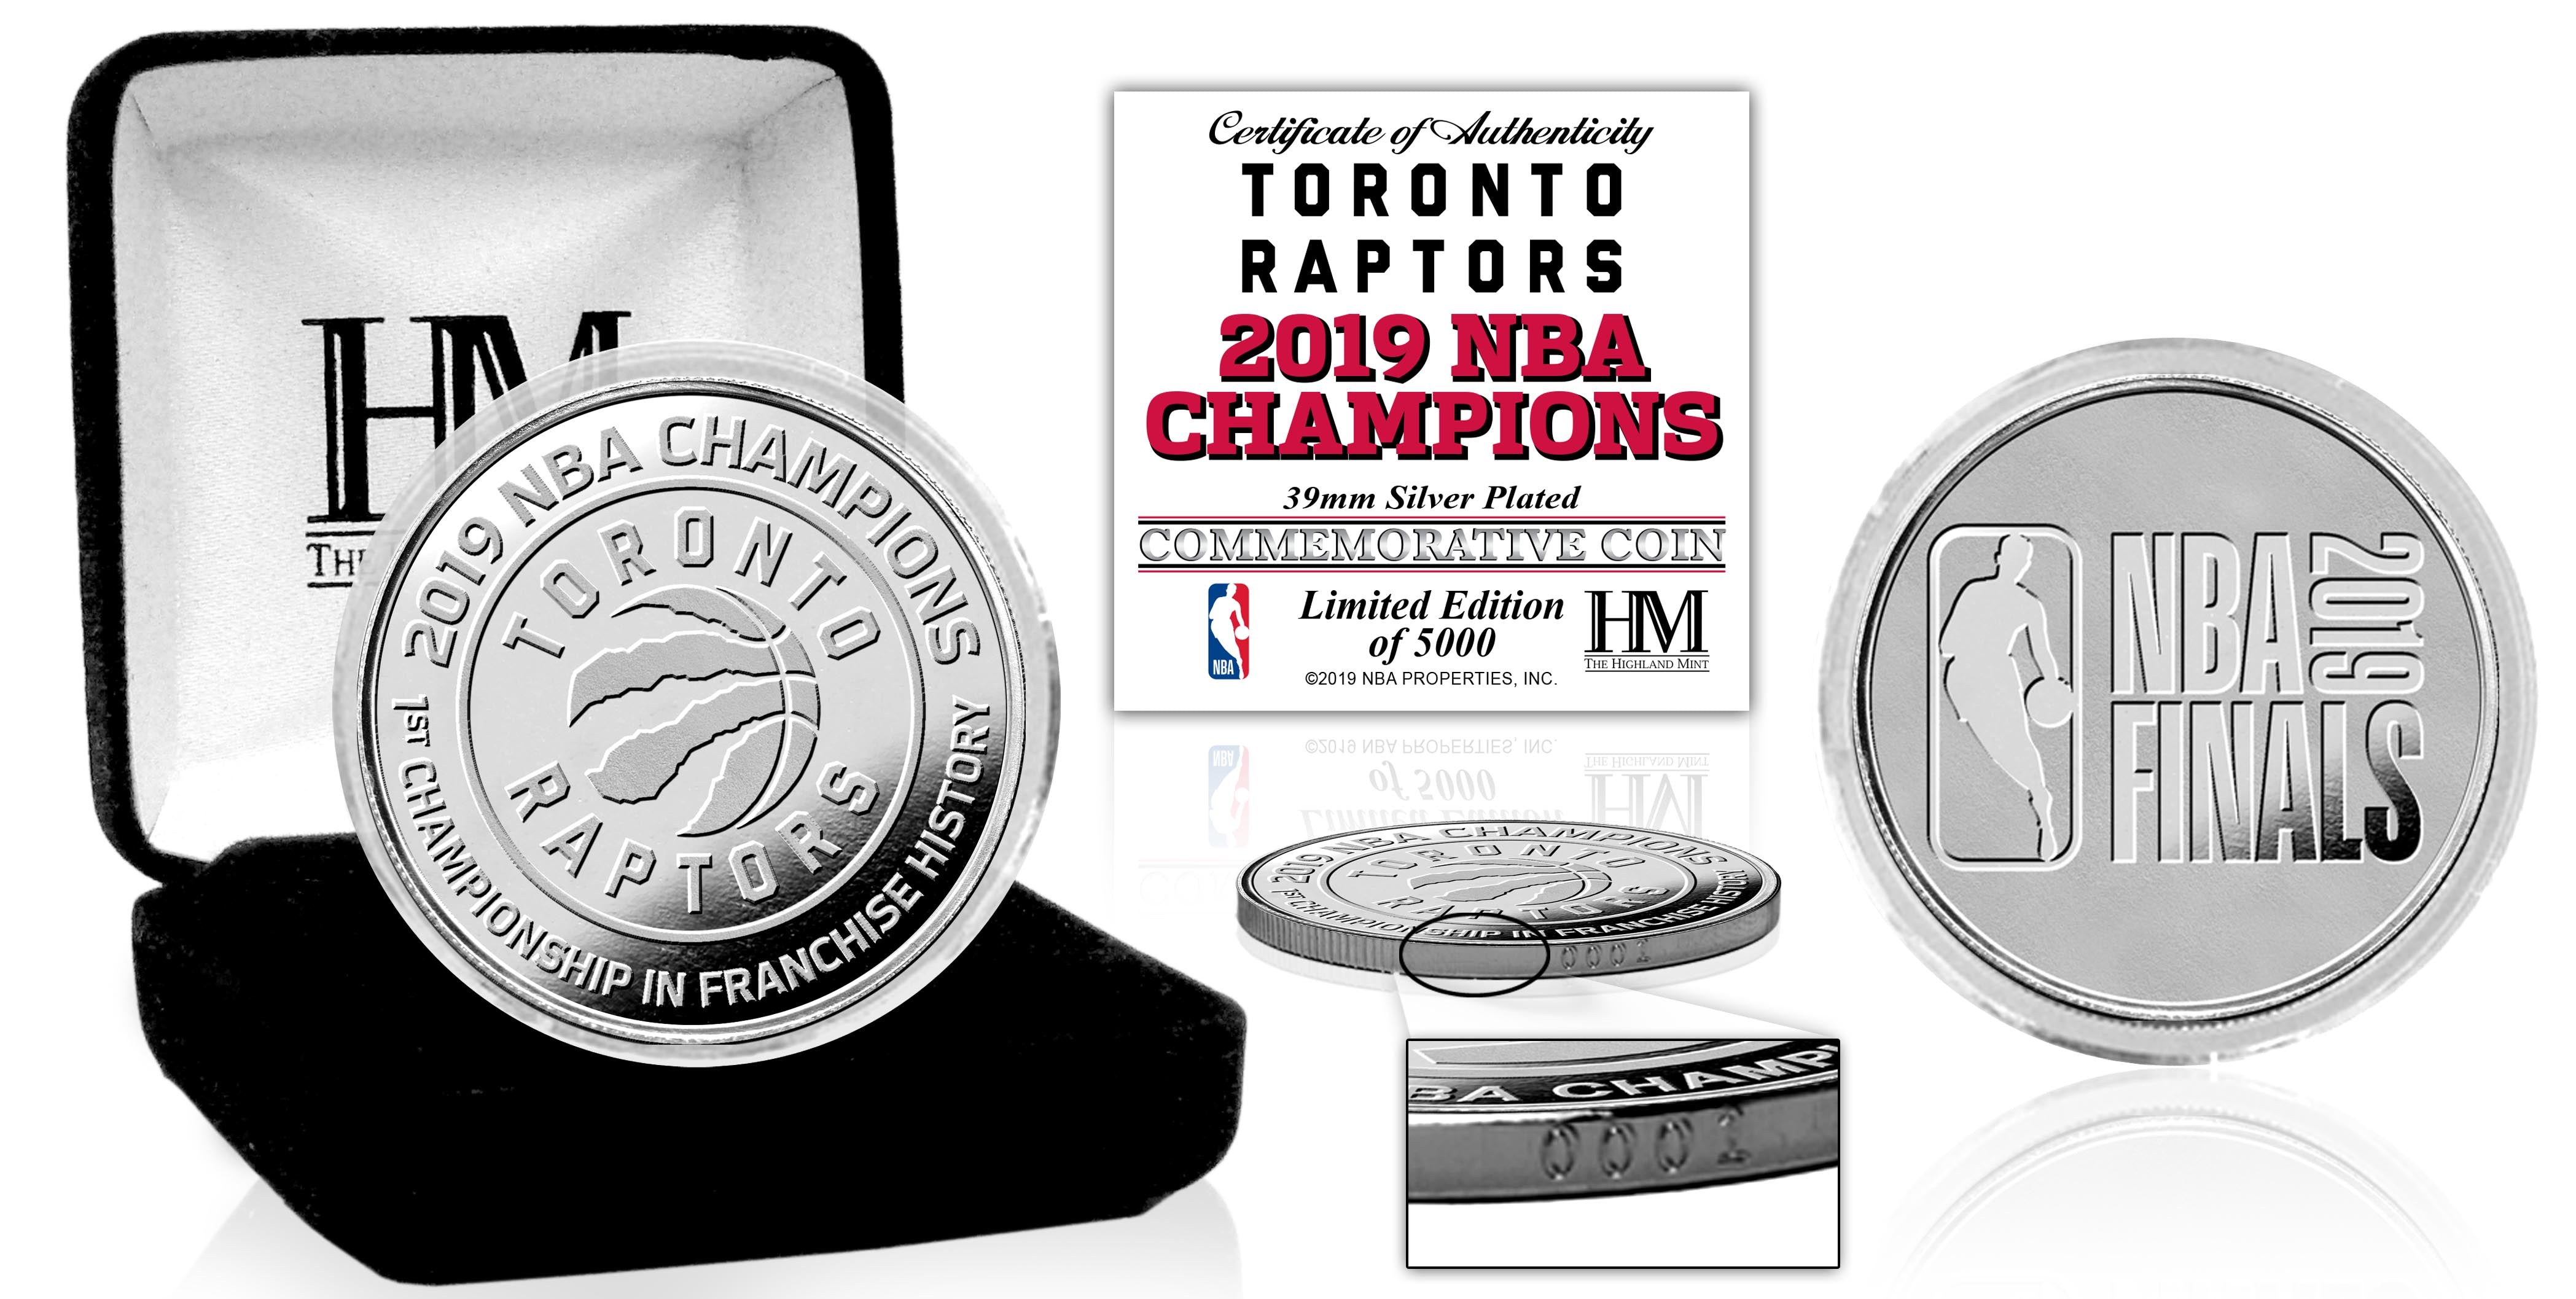 Toronto Raptors 2019 NBA Champions Pin - Limited 1,000